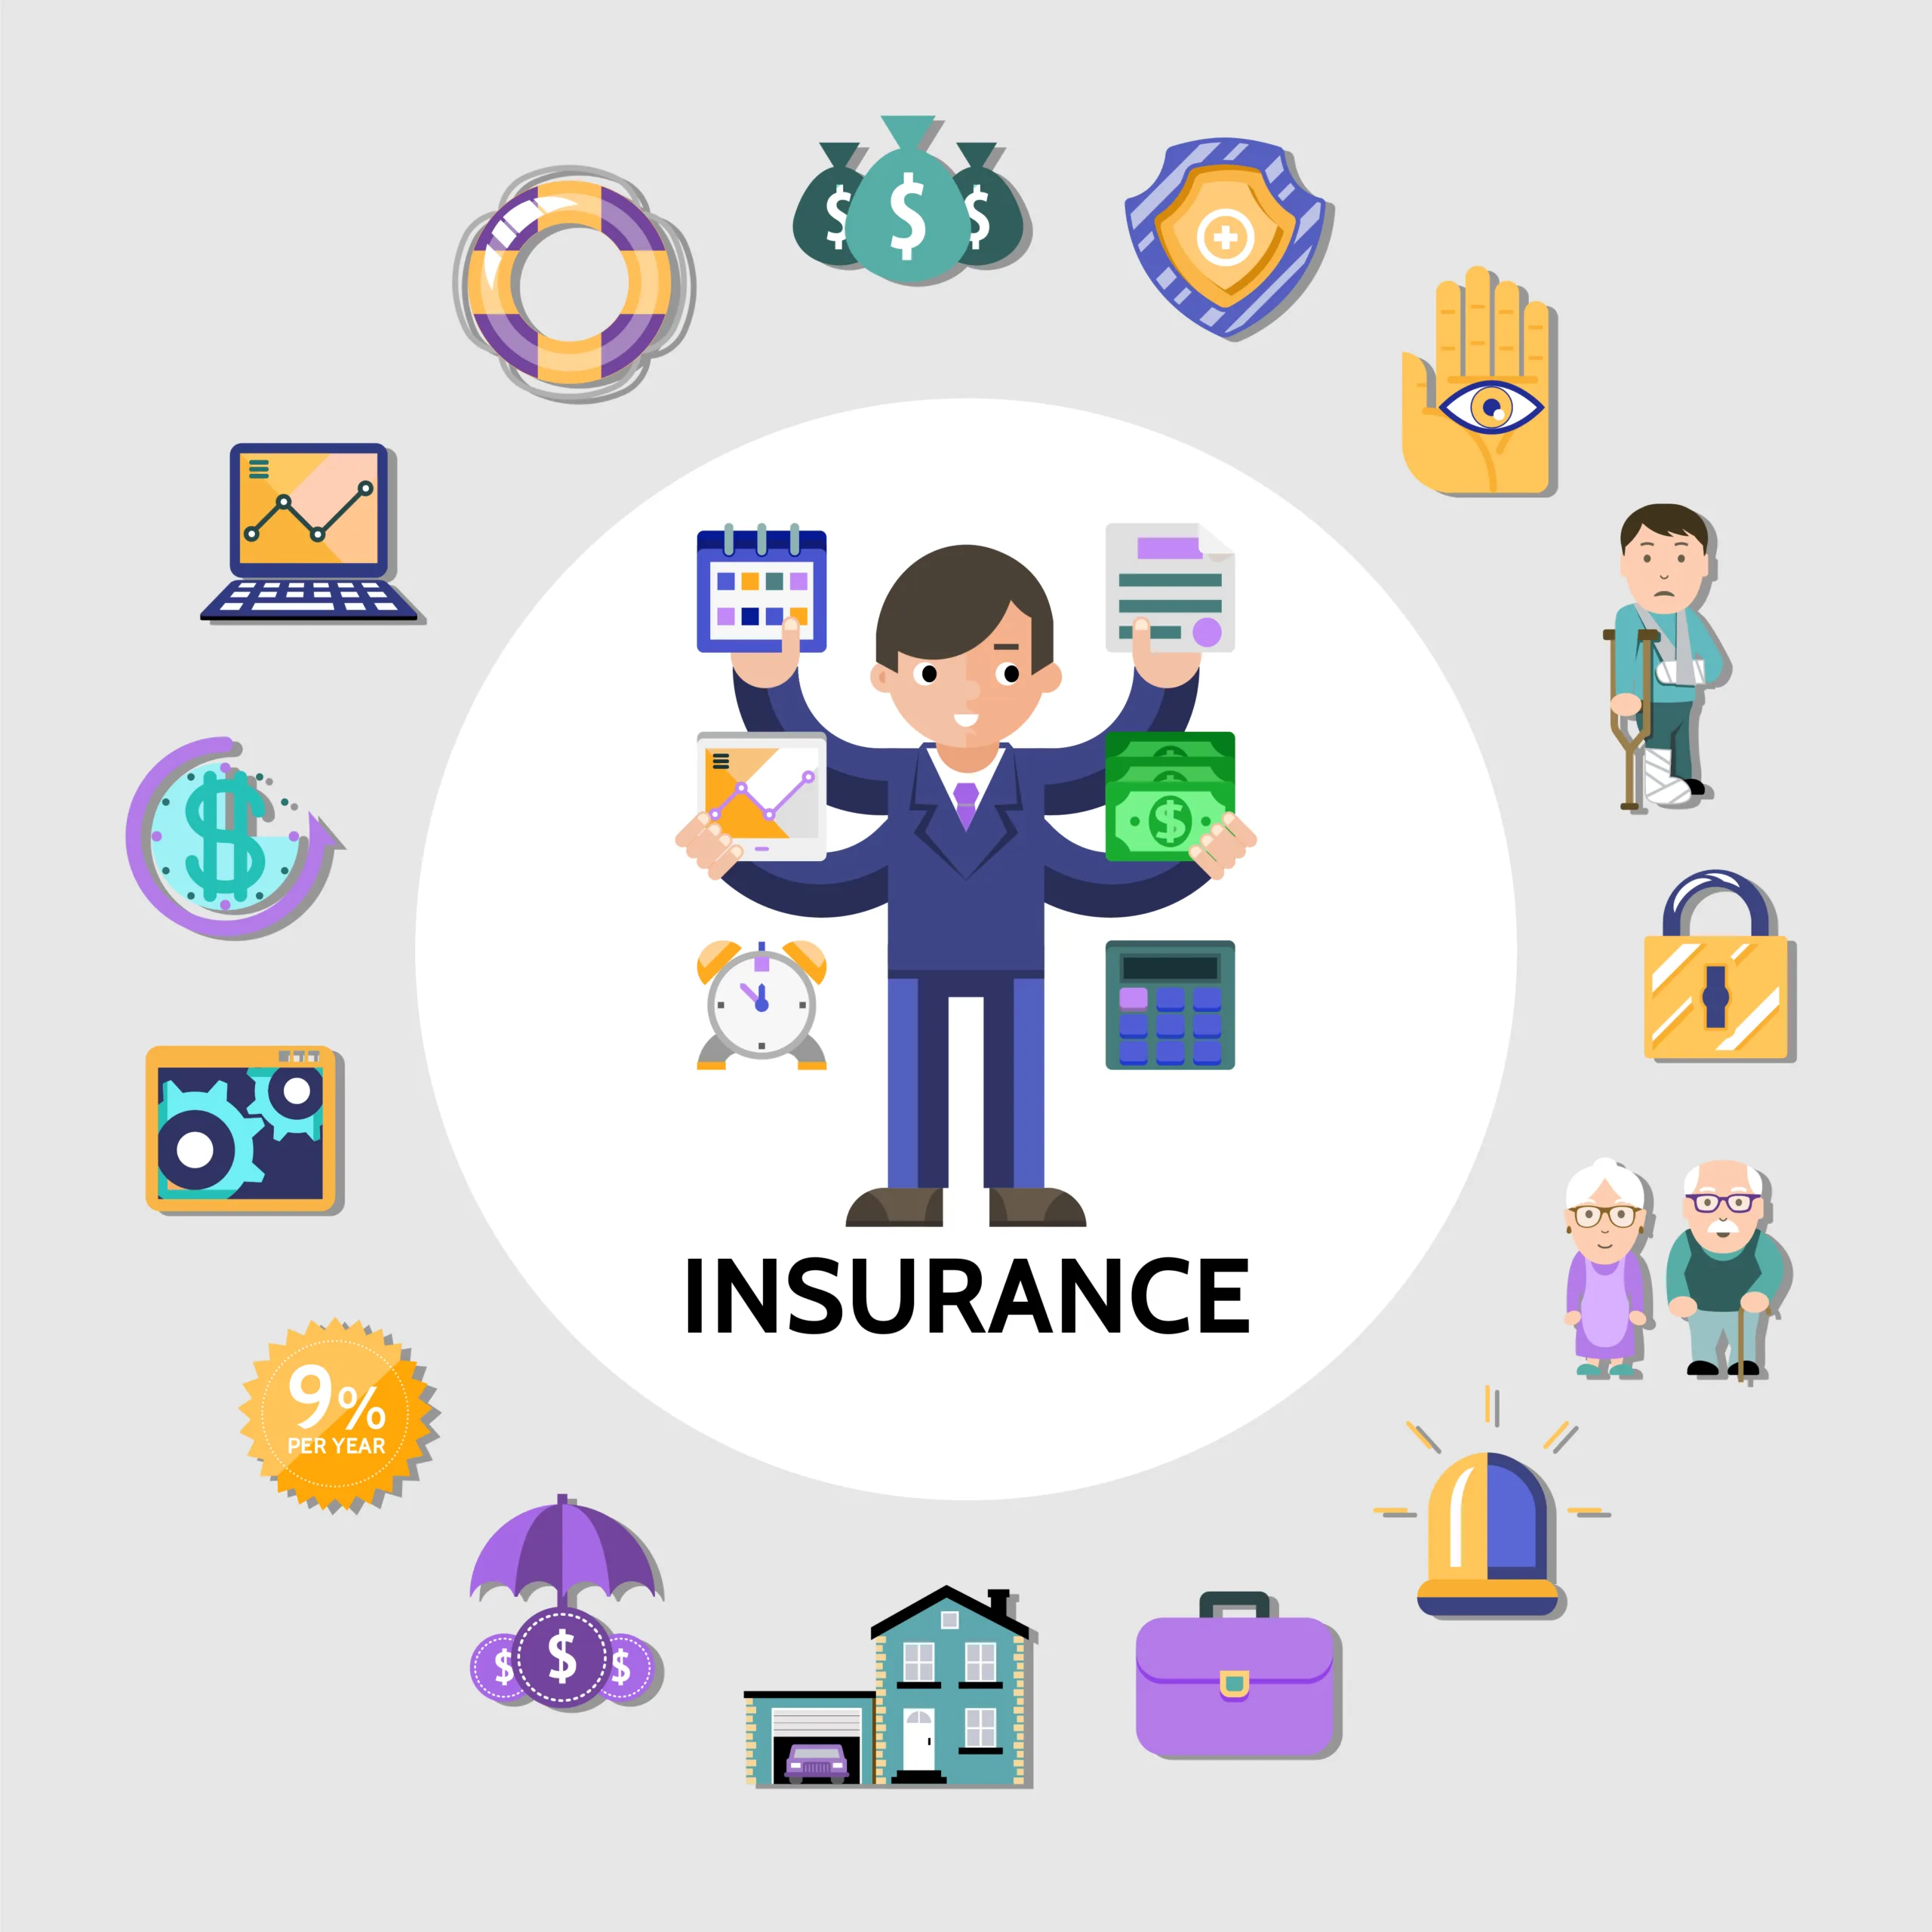 Insurance Types, Best Insurance Plans 2023,Insurance Benefits, Top Insurance Companies USA, Comprehensive Insurance Guide